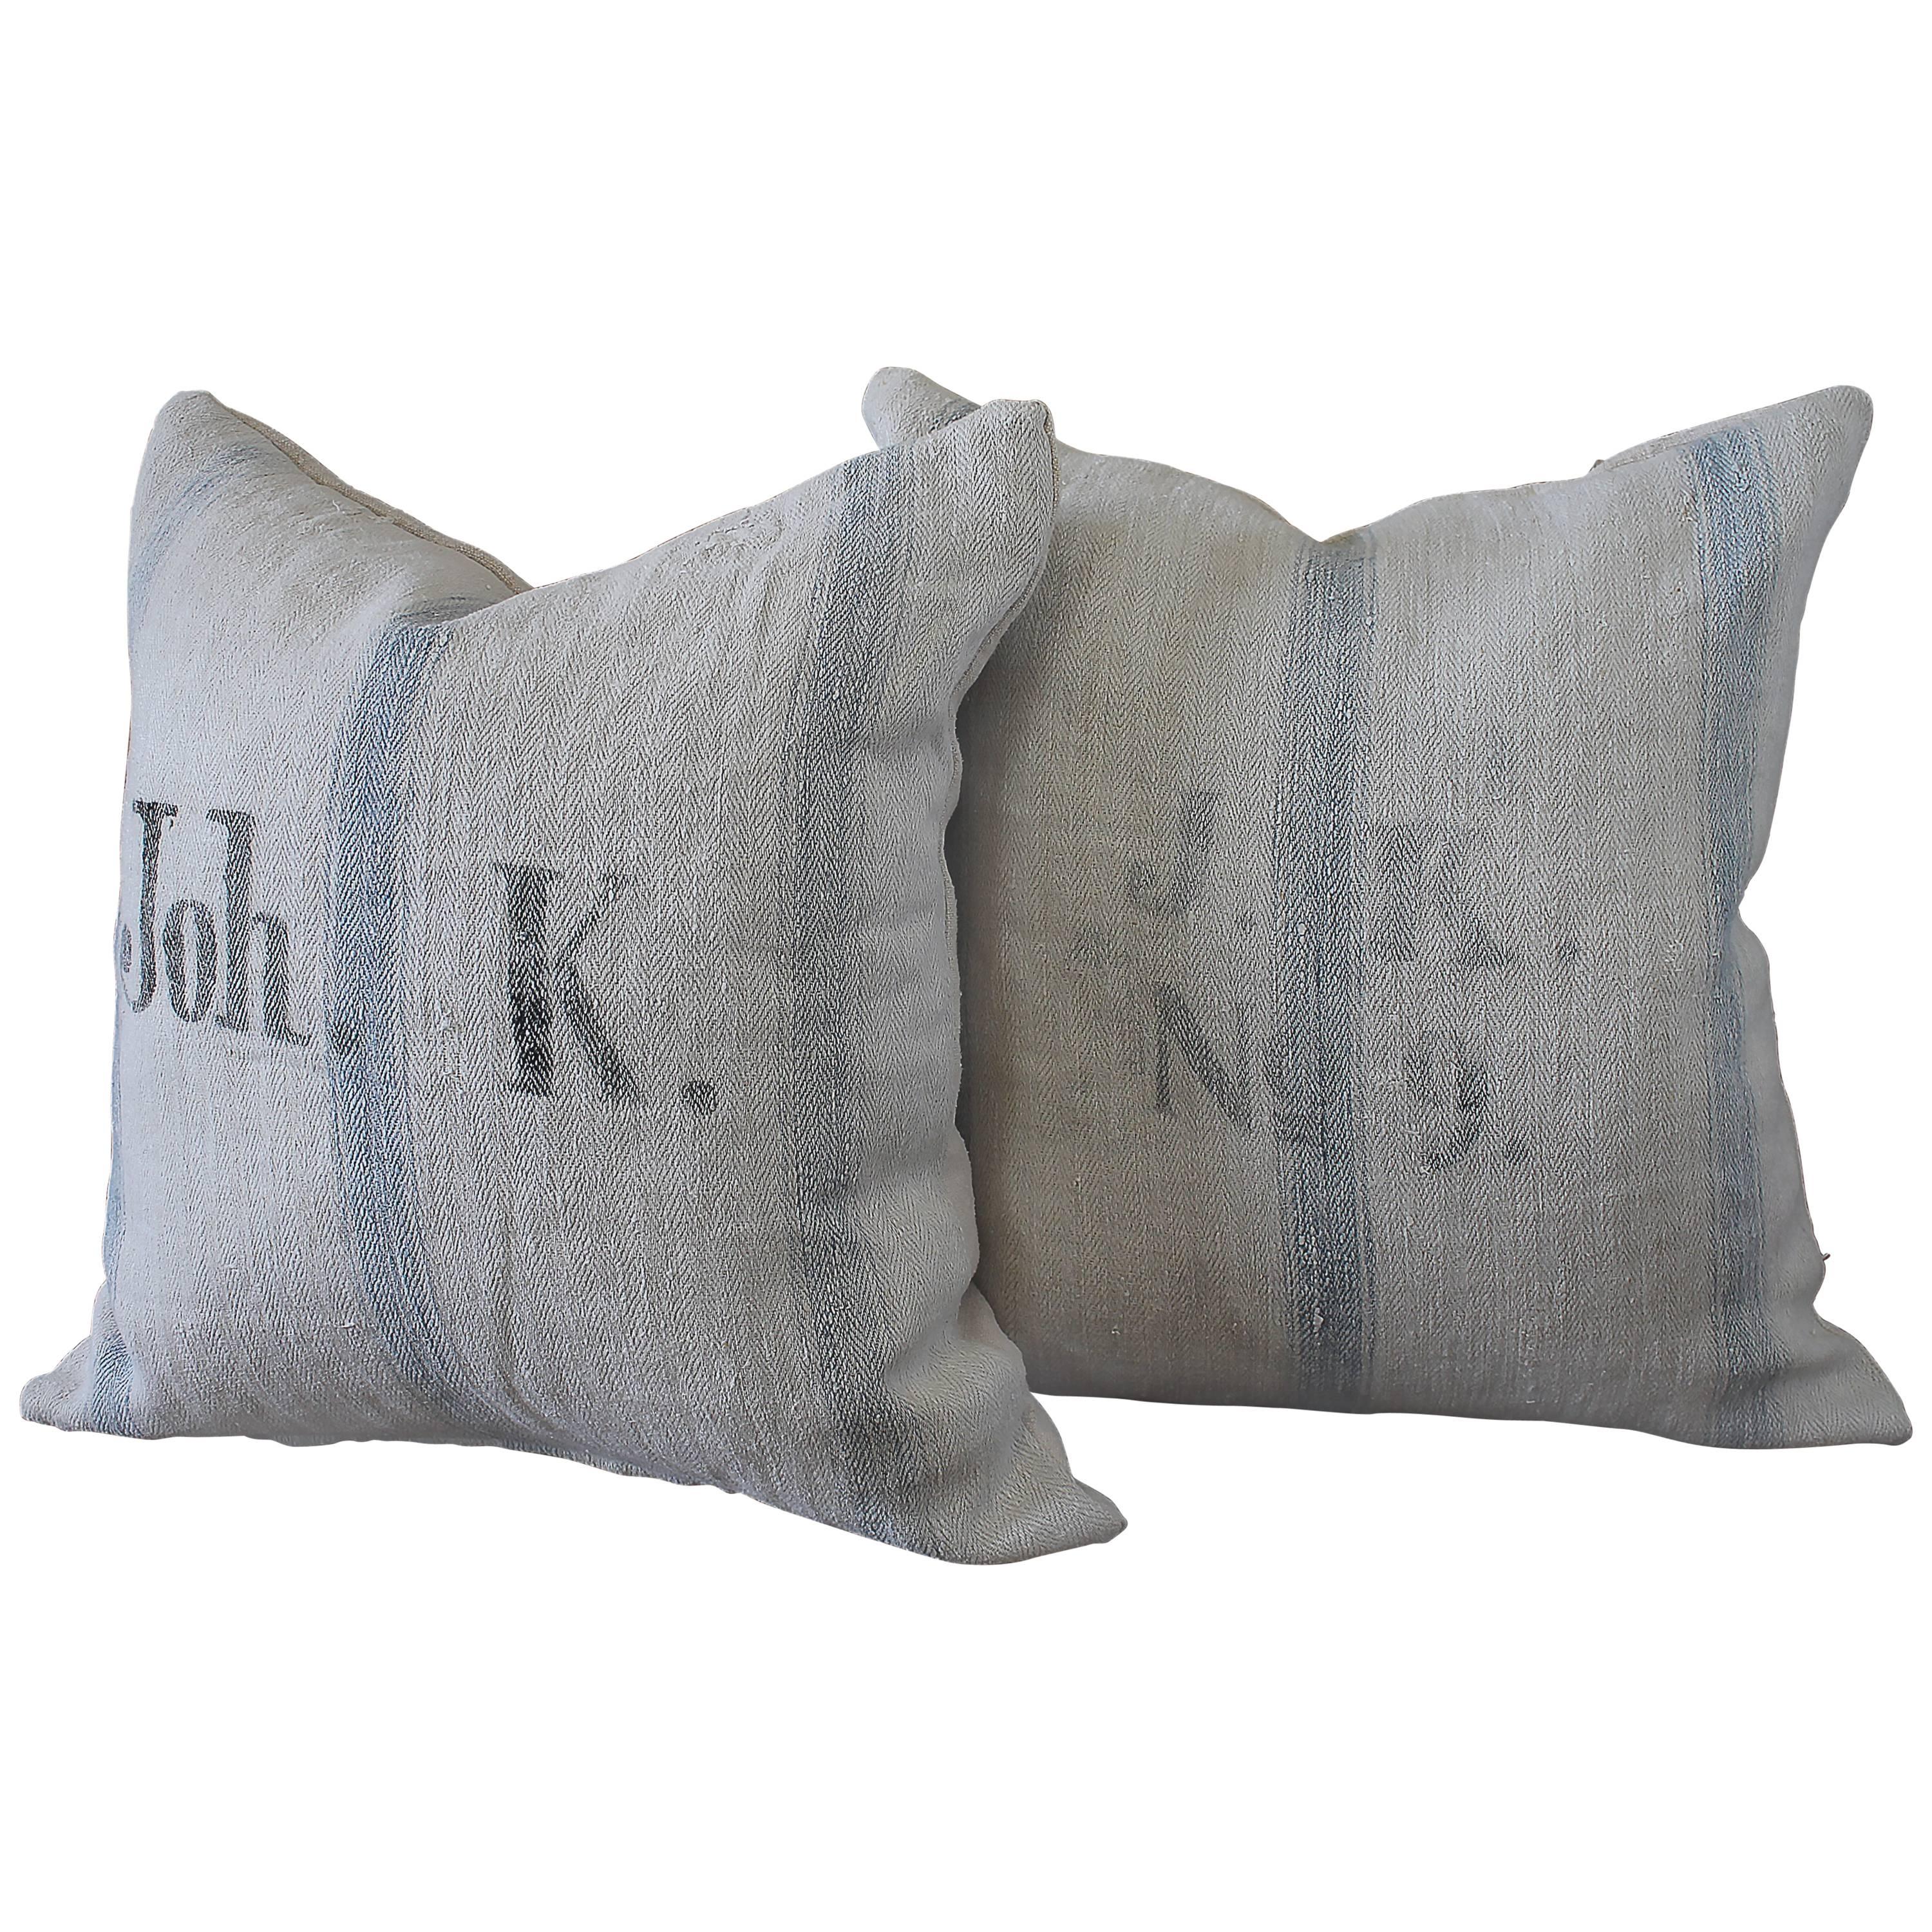 Pair of 19th Century Antique Linen Grain Pillows with Monograms